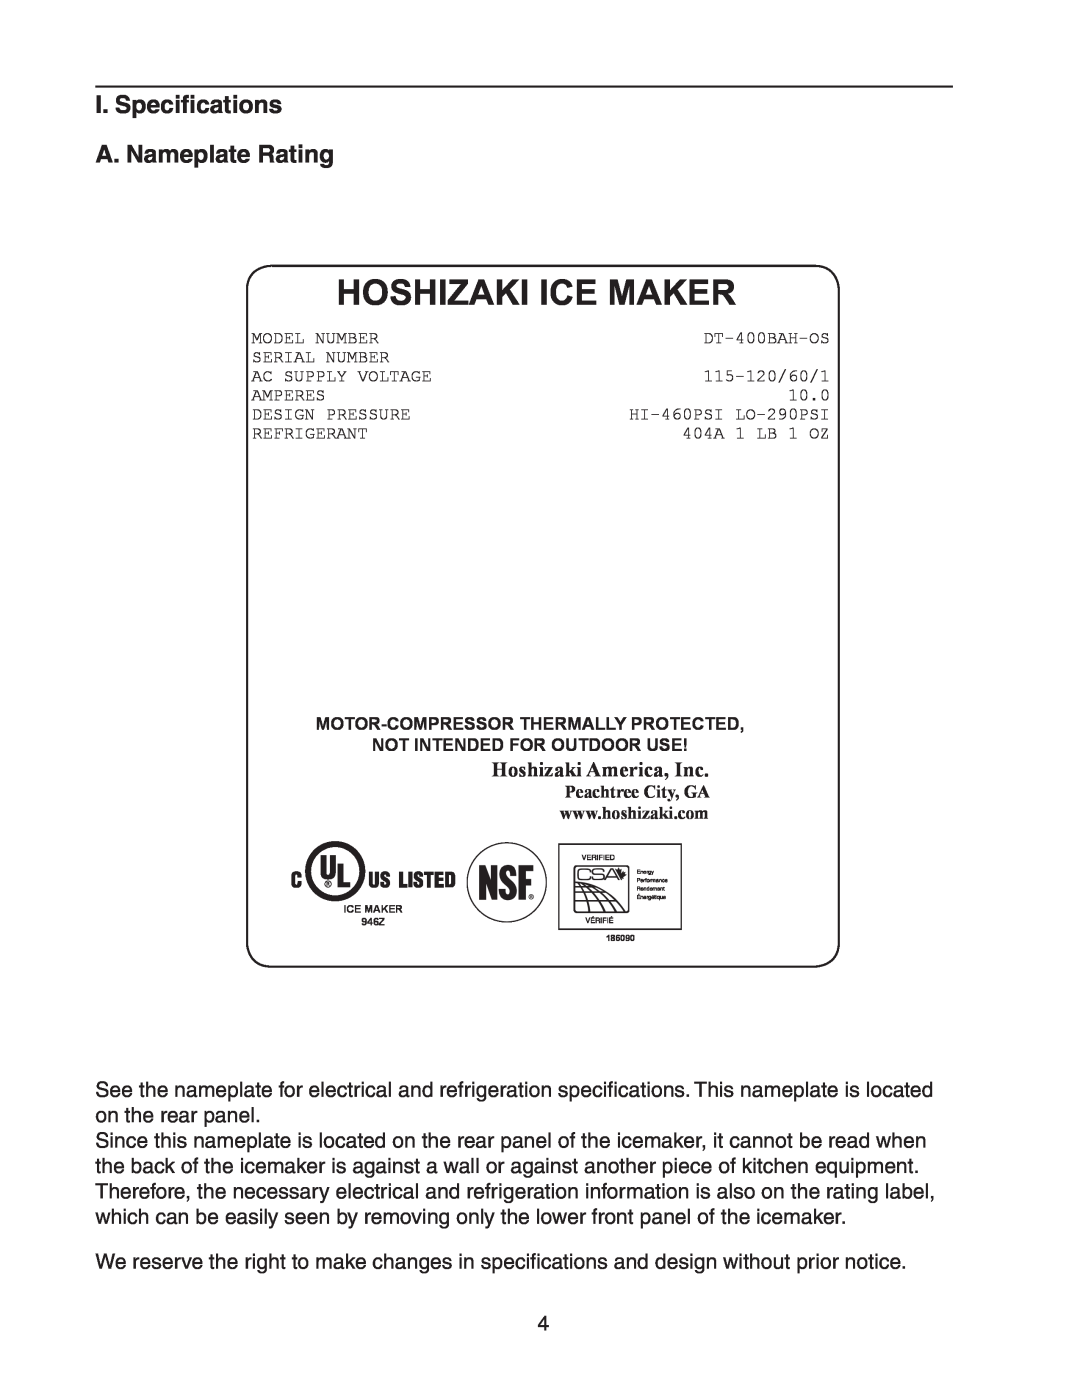 Hoshizaki DT-400BAH-OS I. Specifications A. Nameplate Rating, Hoshizaki Ice Maker, Hoshizaki America, Inc 